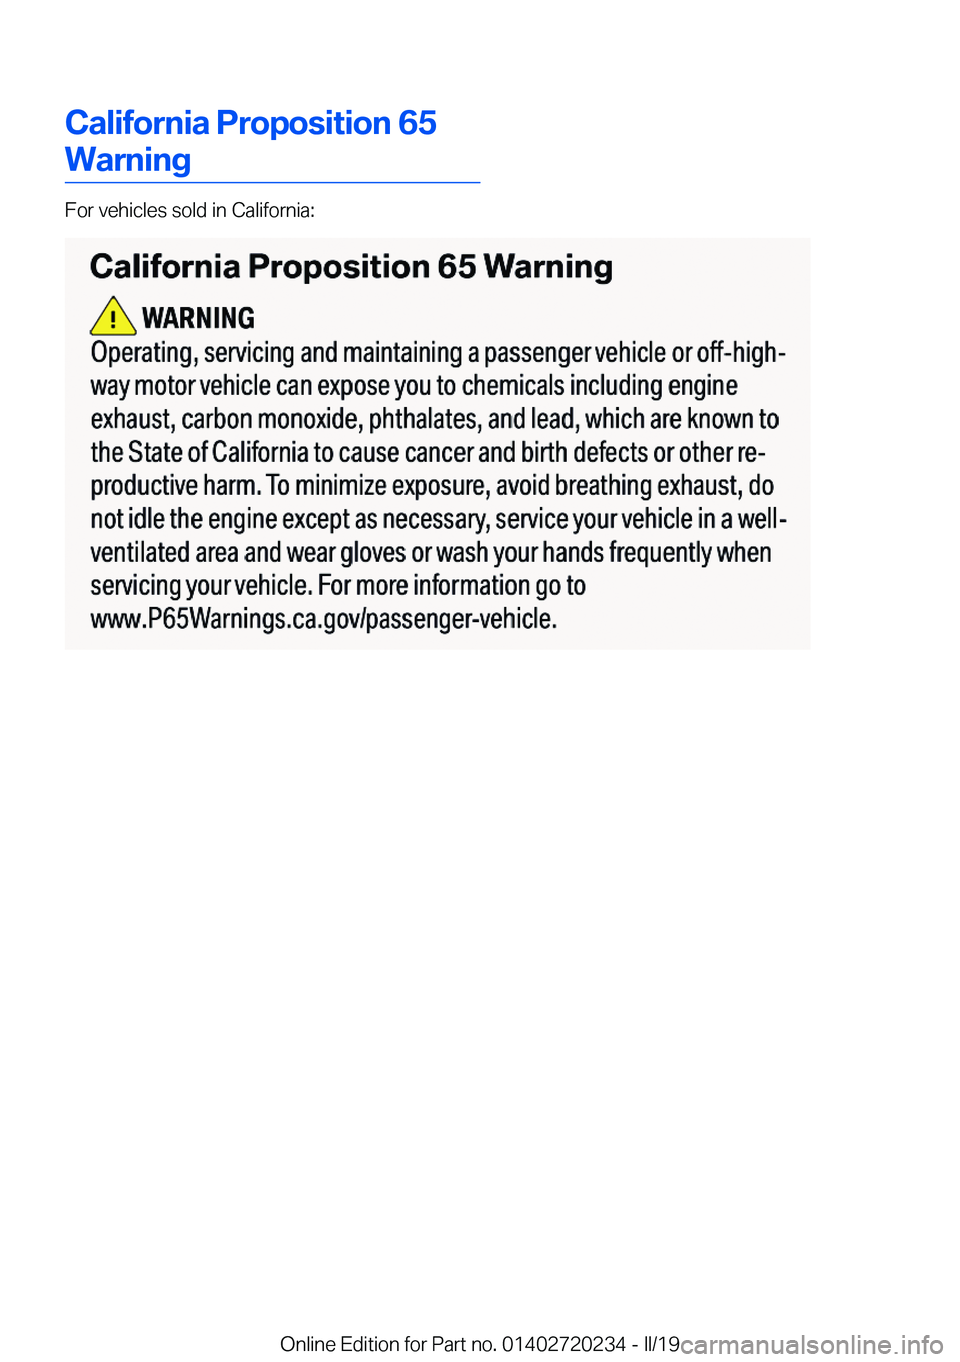 BMW 2 SERIES CONVERTIBLE 2020  Owners Manual �C�a�l�i�f�o�r�n�i�a��P�r�o�p�o�s�i�t�i�o�n��6�5
�W�a�r�n�i�n�g
�F�o�r��v�e�h�i�c�l�e�s��s�o�l�d��i�n��C�a�l�i�f�o�r�n�i�a�:
�O�n�l�i�n�e��E�d�i�t�i�o�n��f�o�r��P�a�r�t��n�o�.��0�1�4�0�2�7�